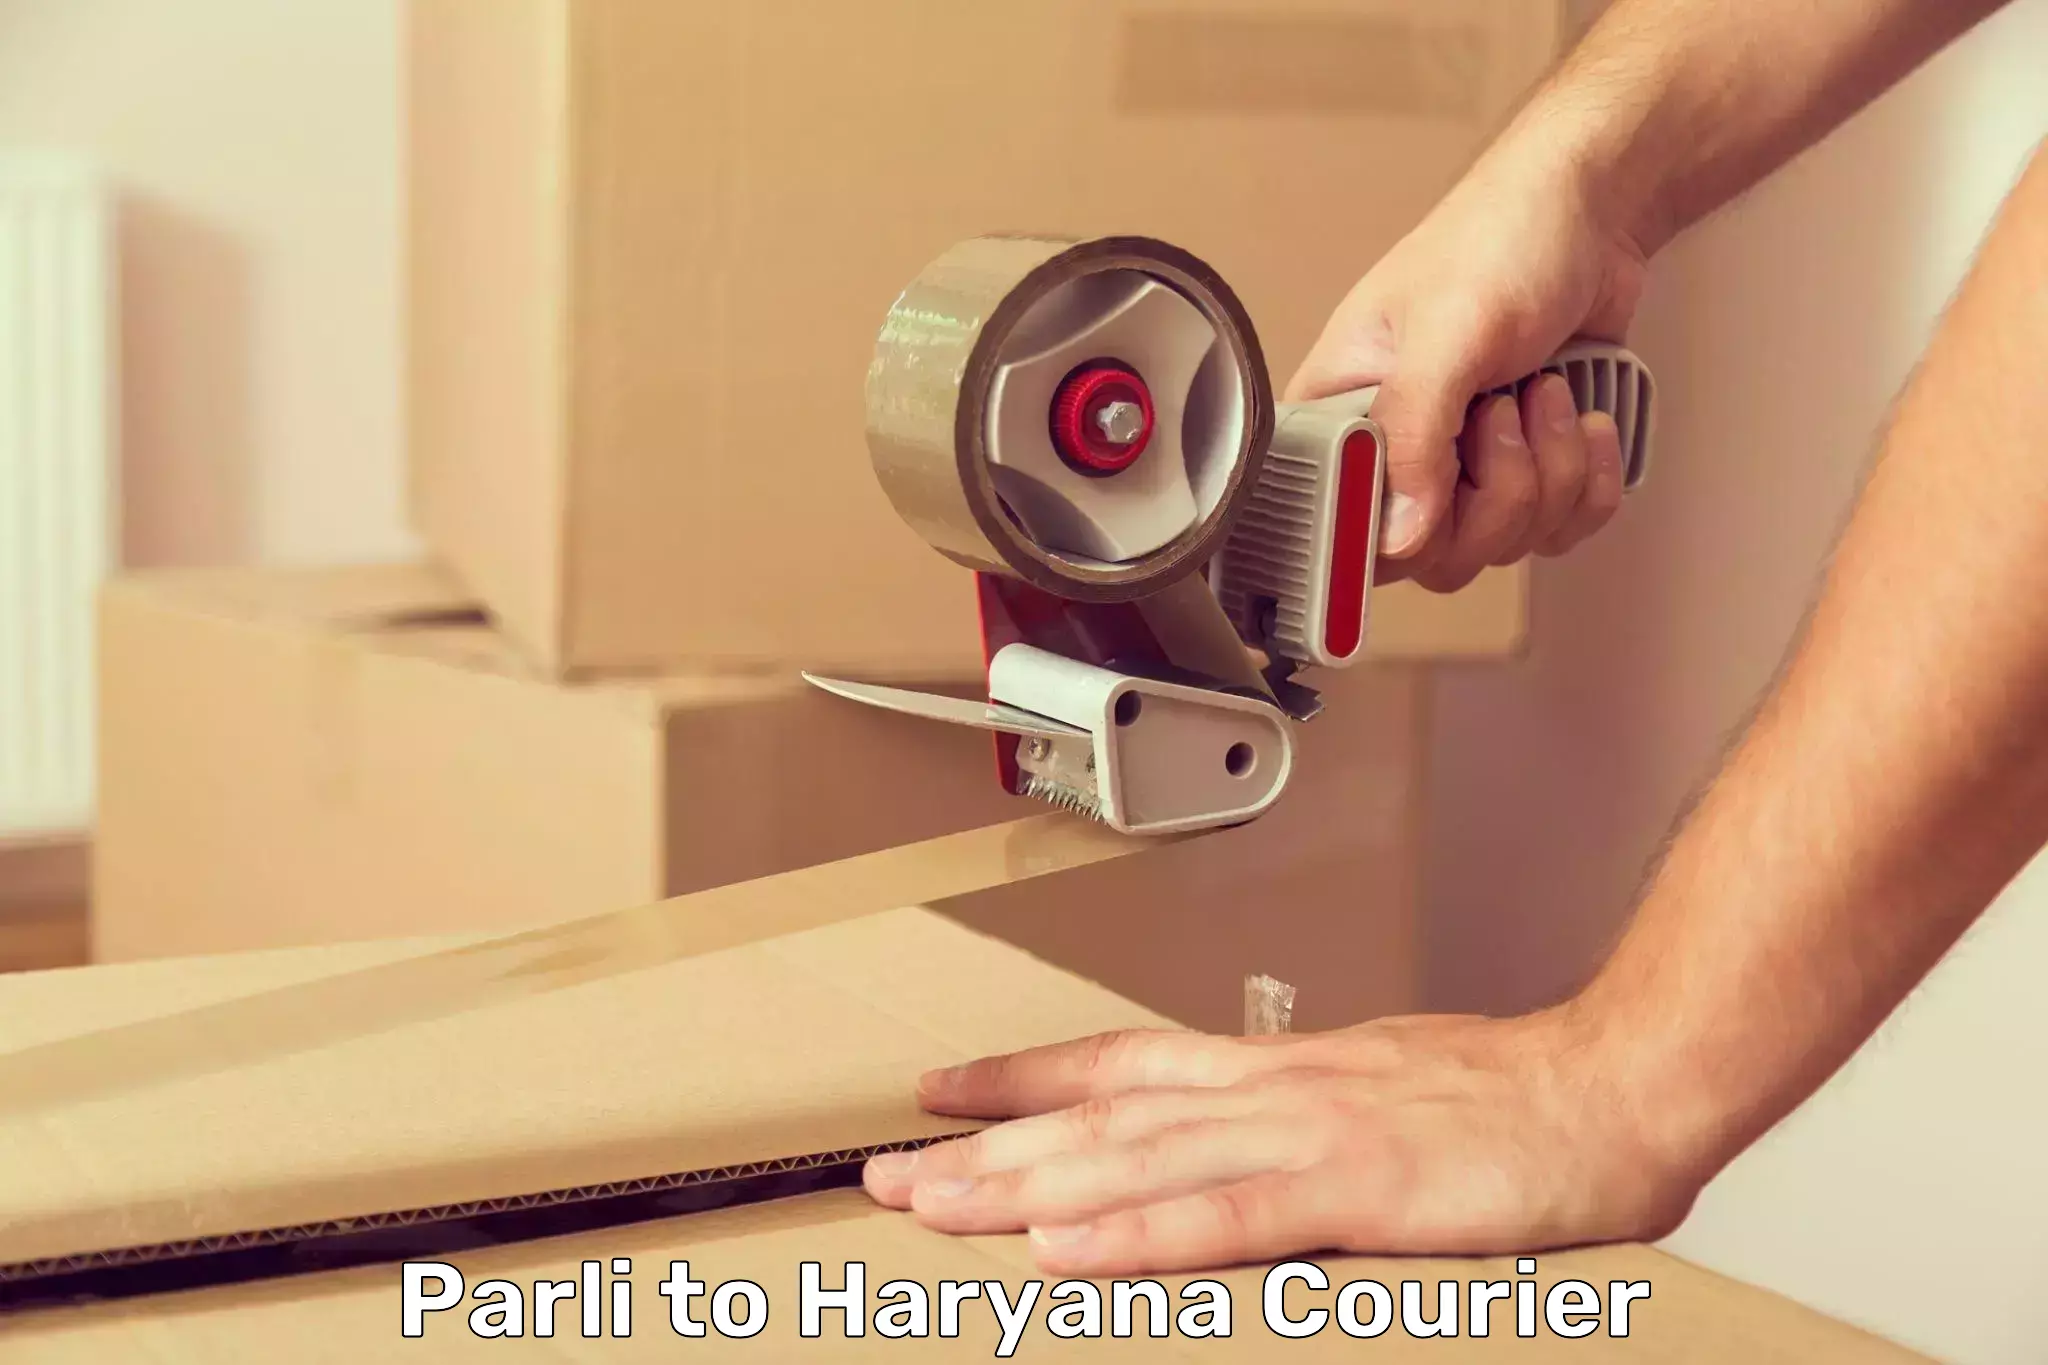 Express courier capabilities Parli to Gurugram